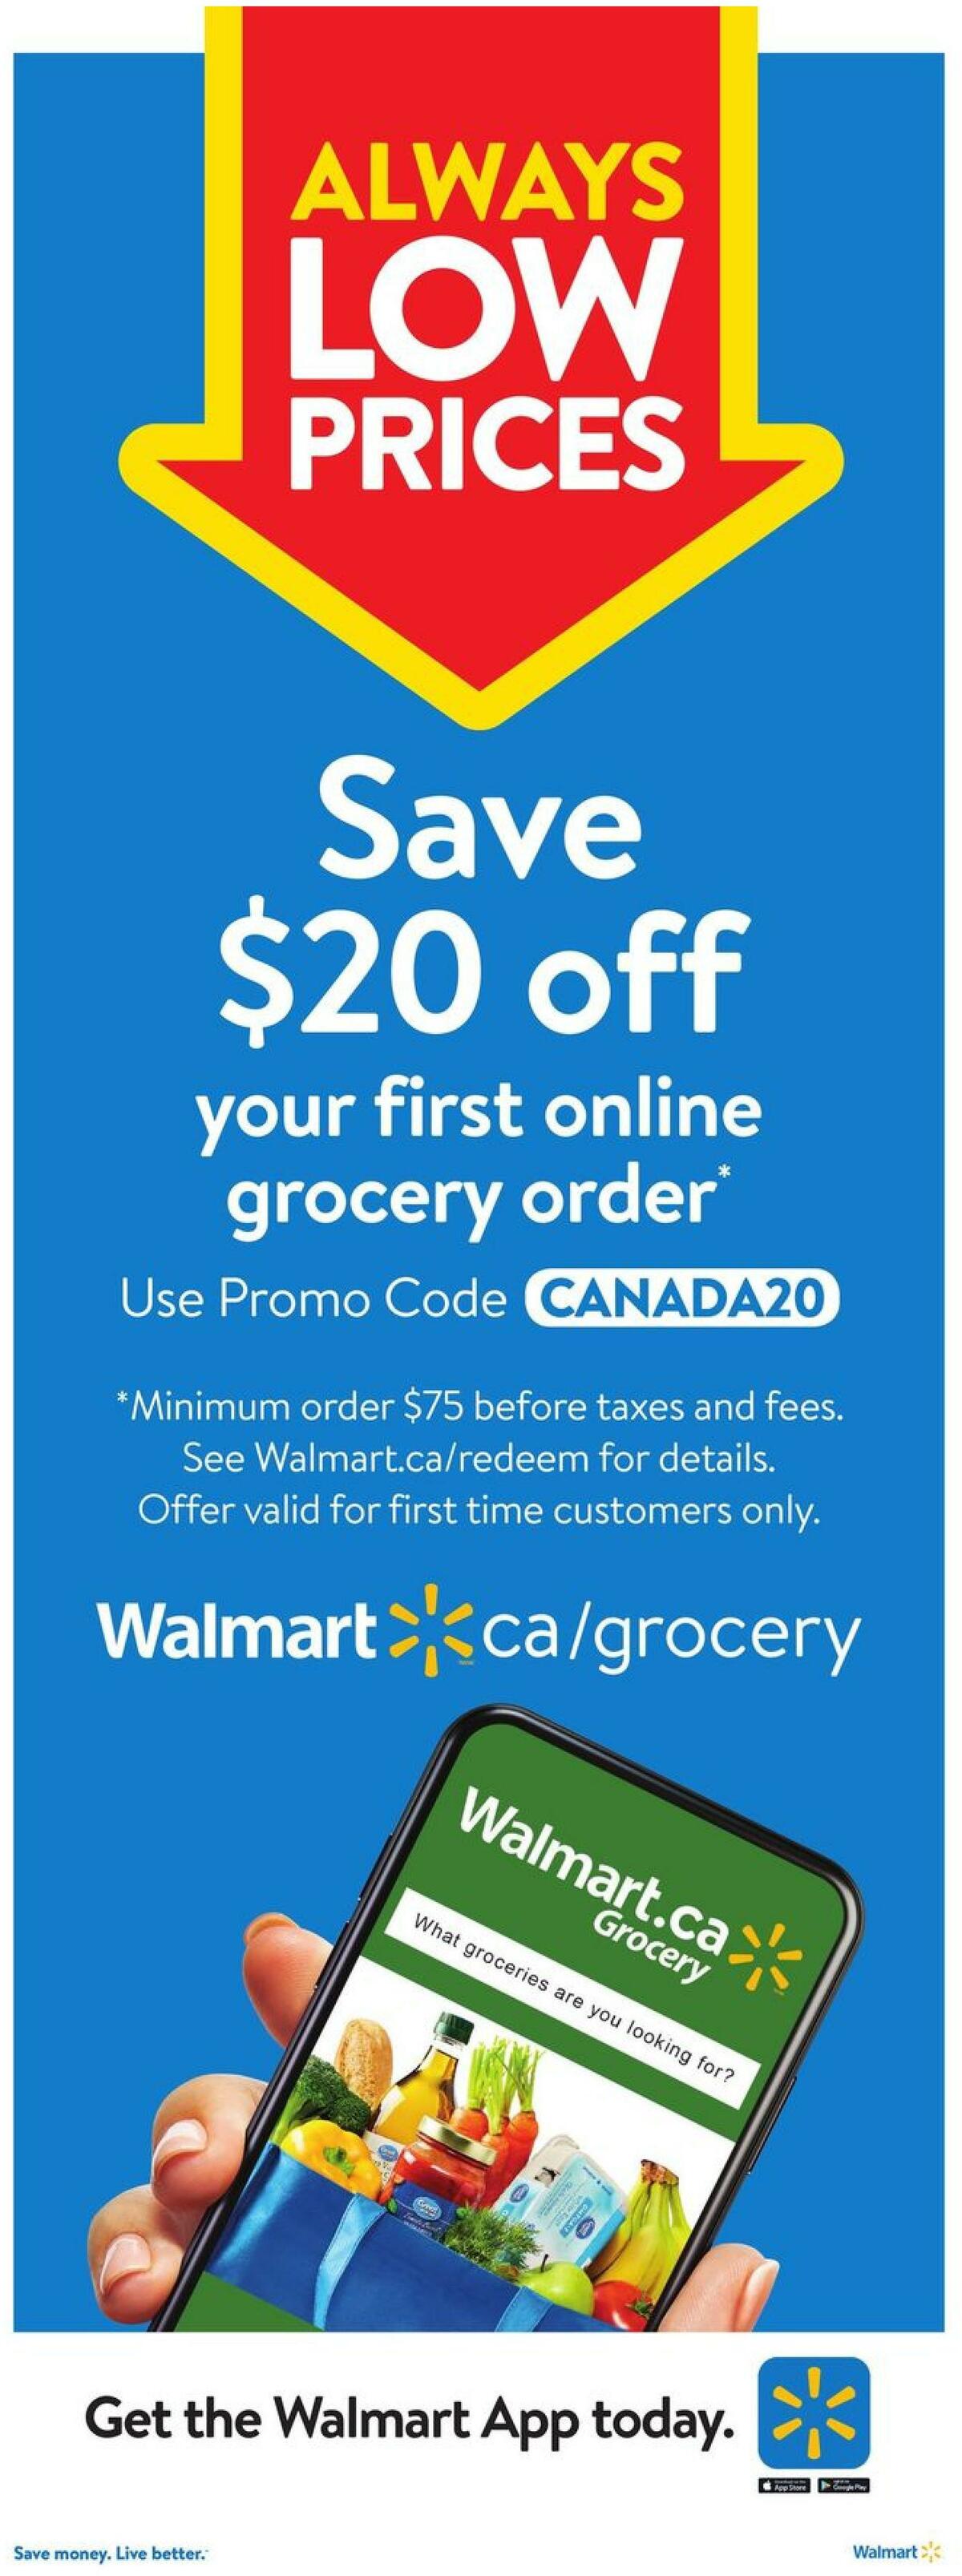 Walmart Flyer from October 14